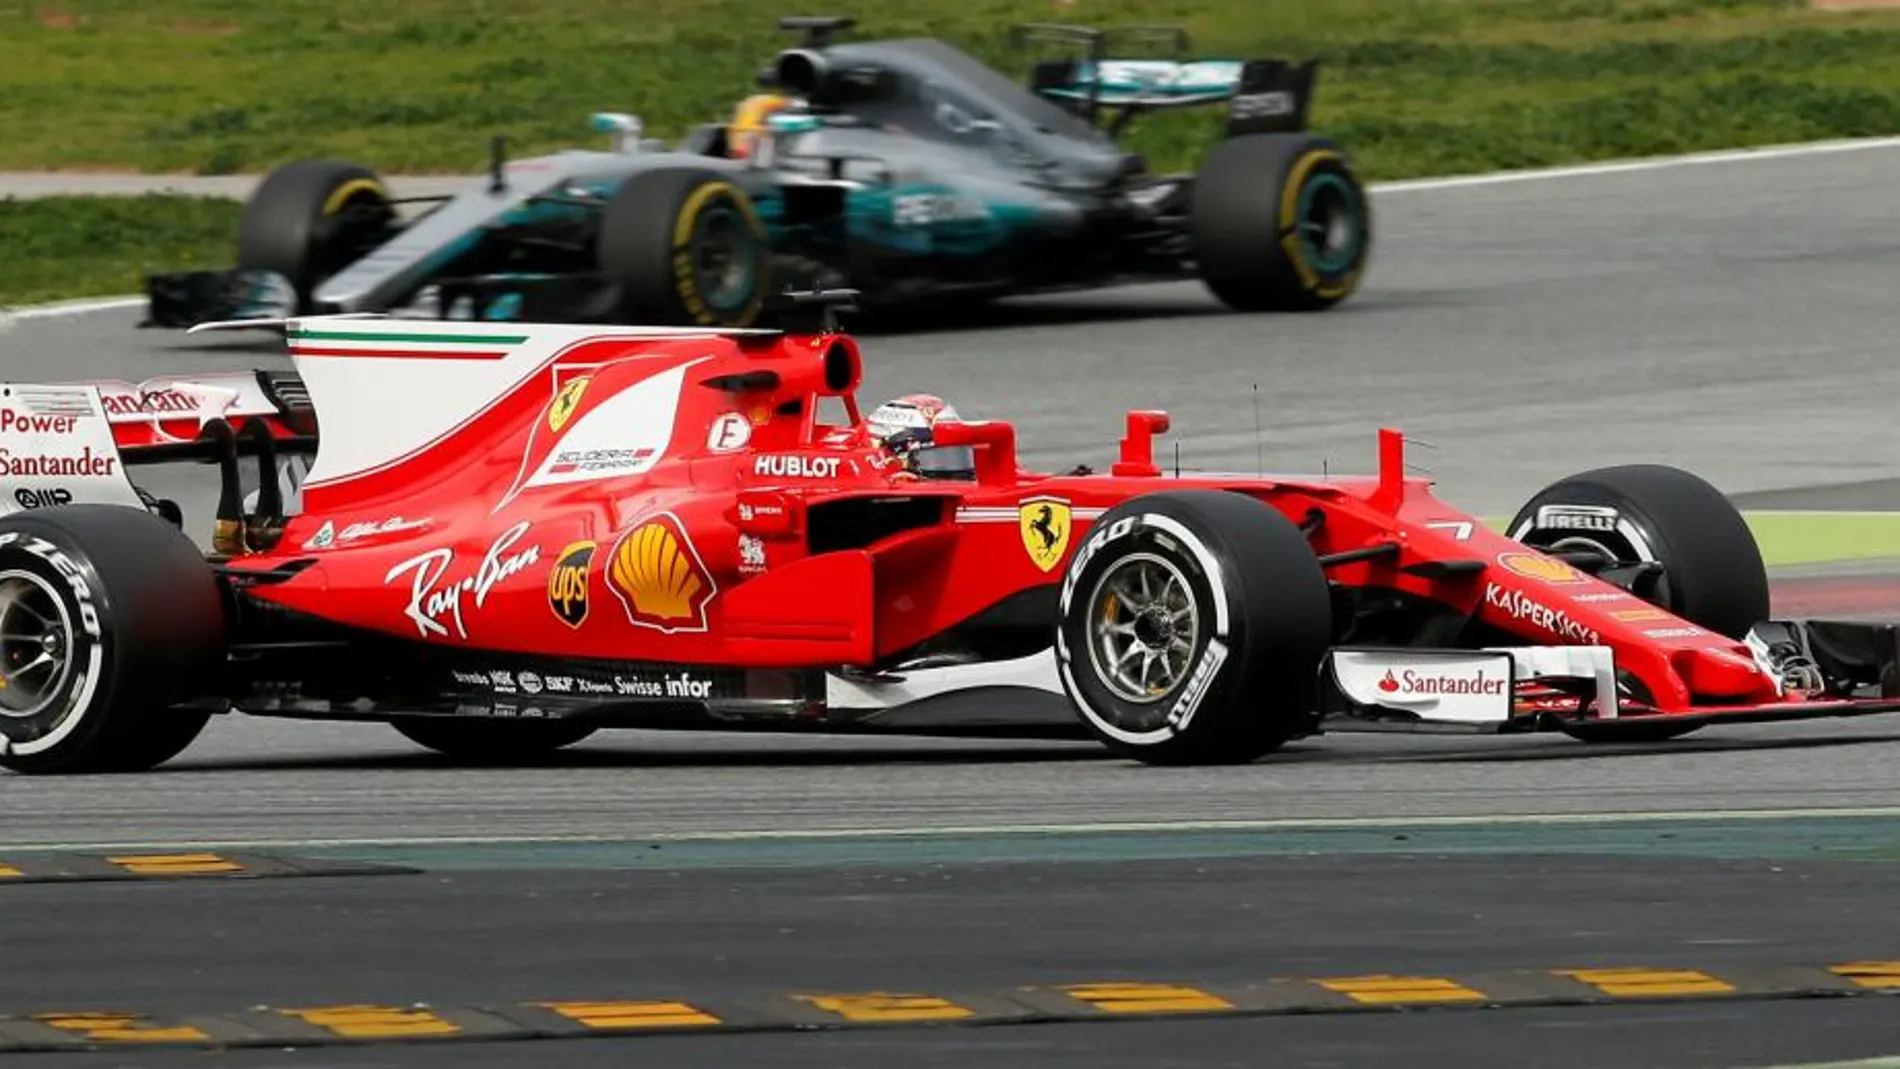 Kimi Raikkonen, en su Ferrari, seguido por el Mercedes de Lewis Hamilton